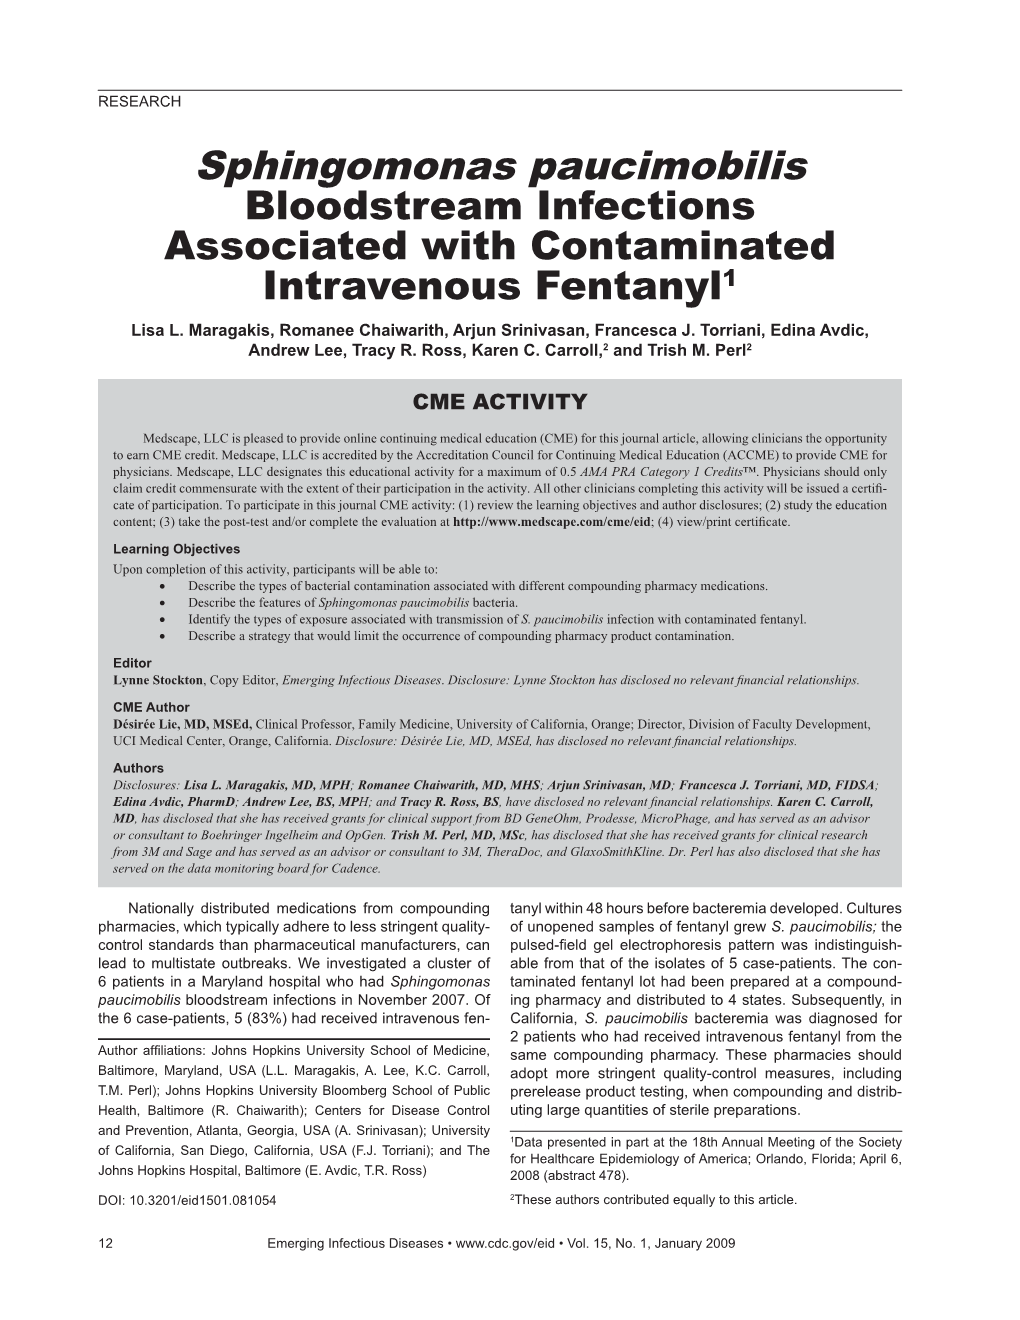 Sphingomonas Paucimobilis Bloodstream Infections Associated with Contaminated Intravenous Fentanyl1 Lisa L